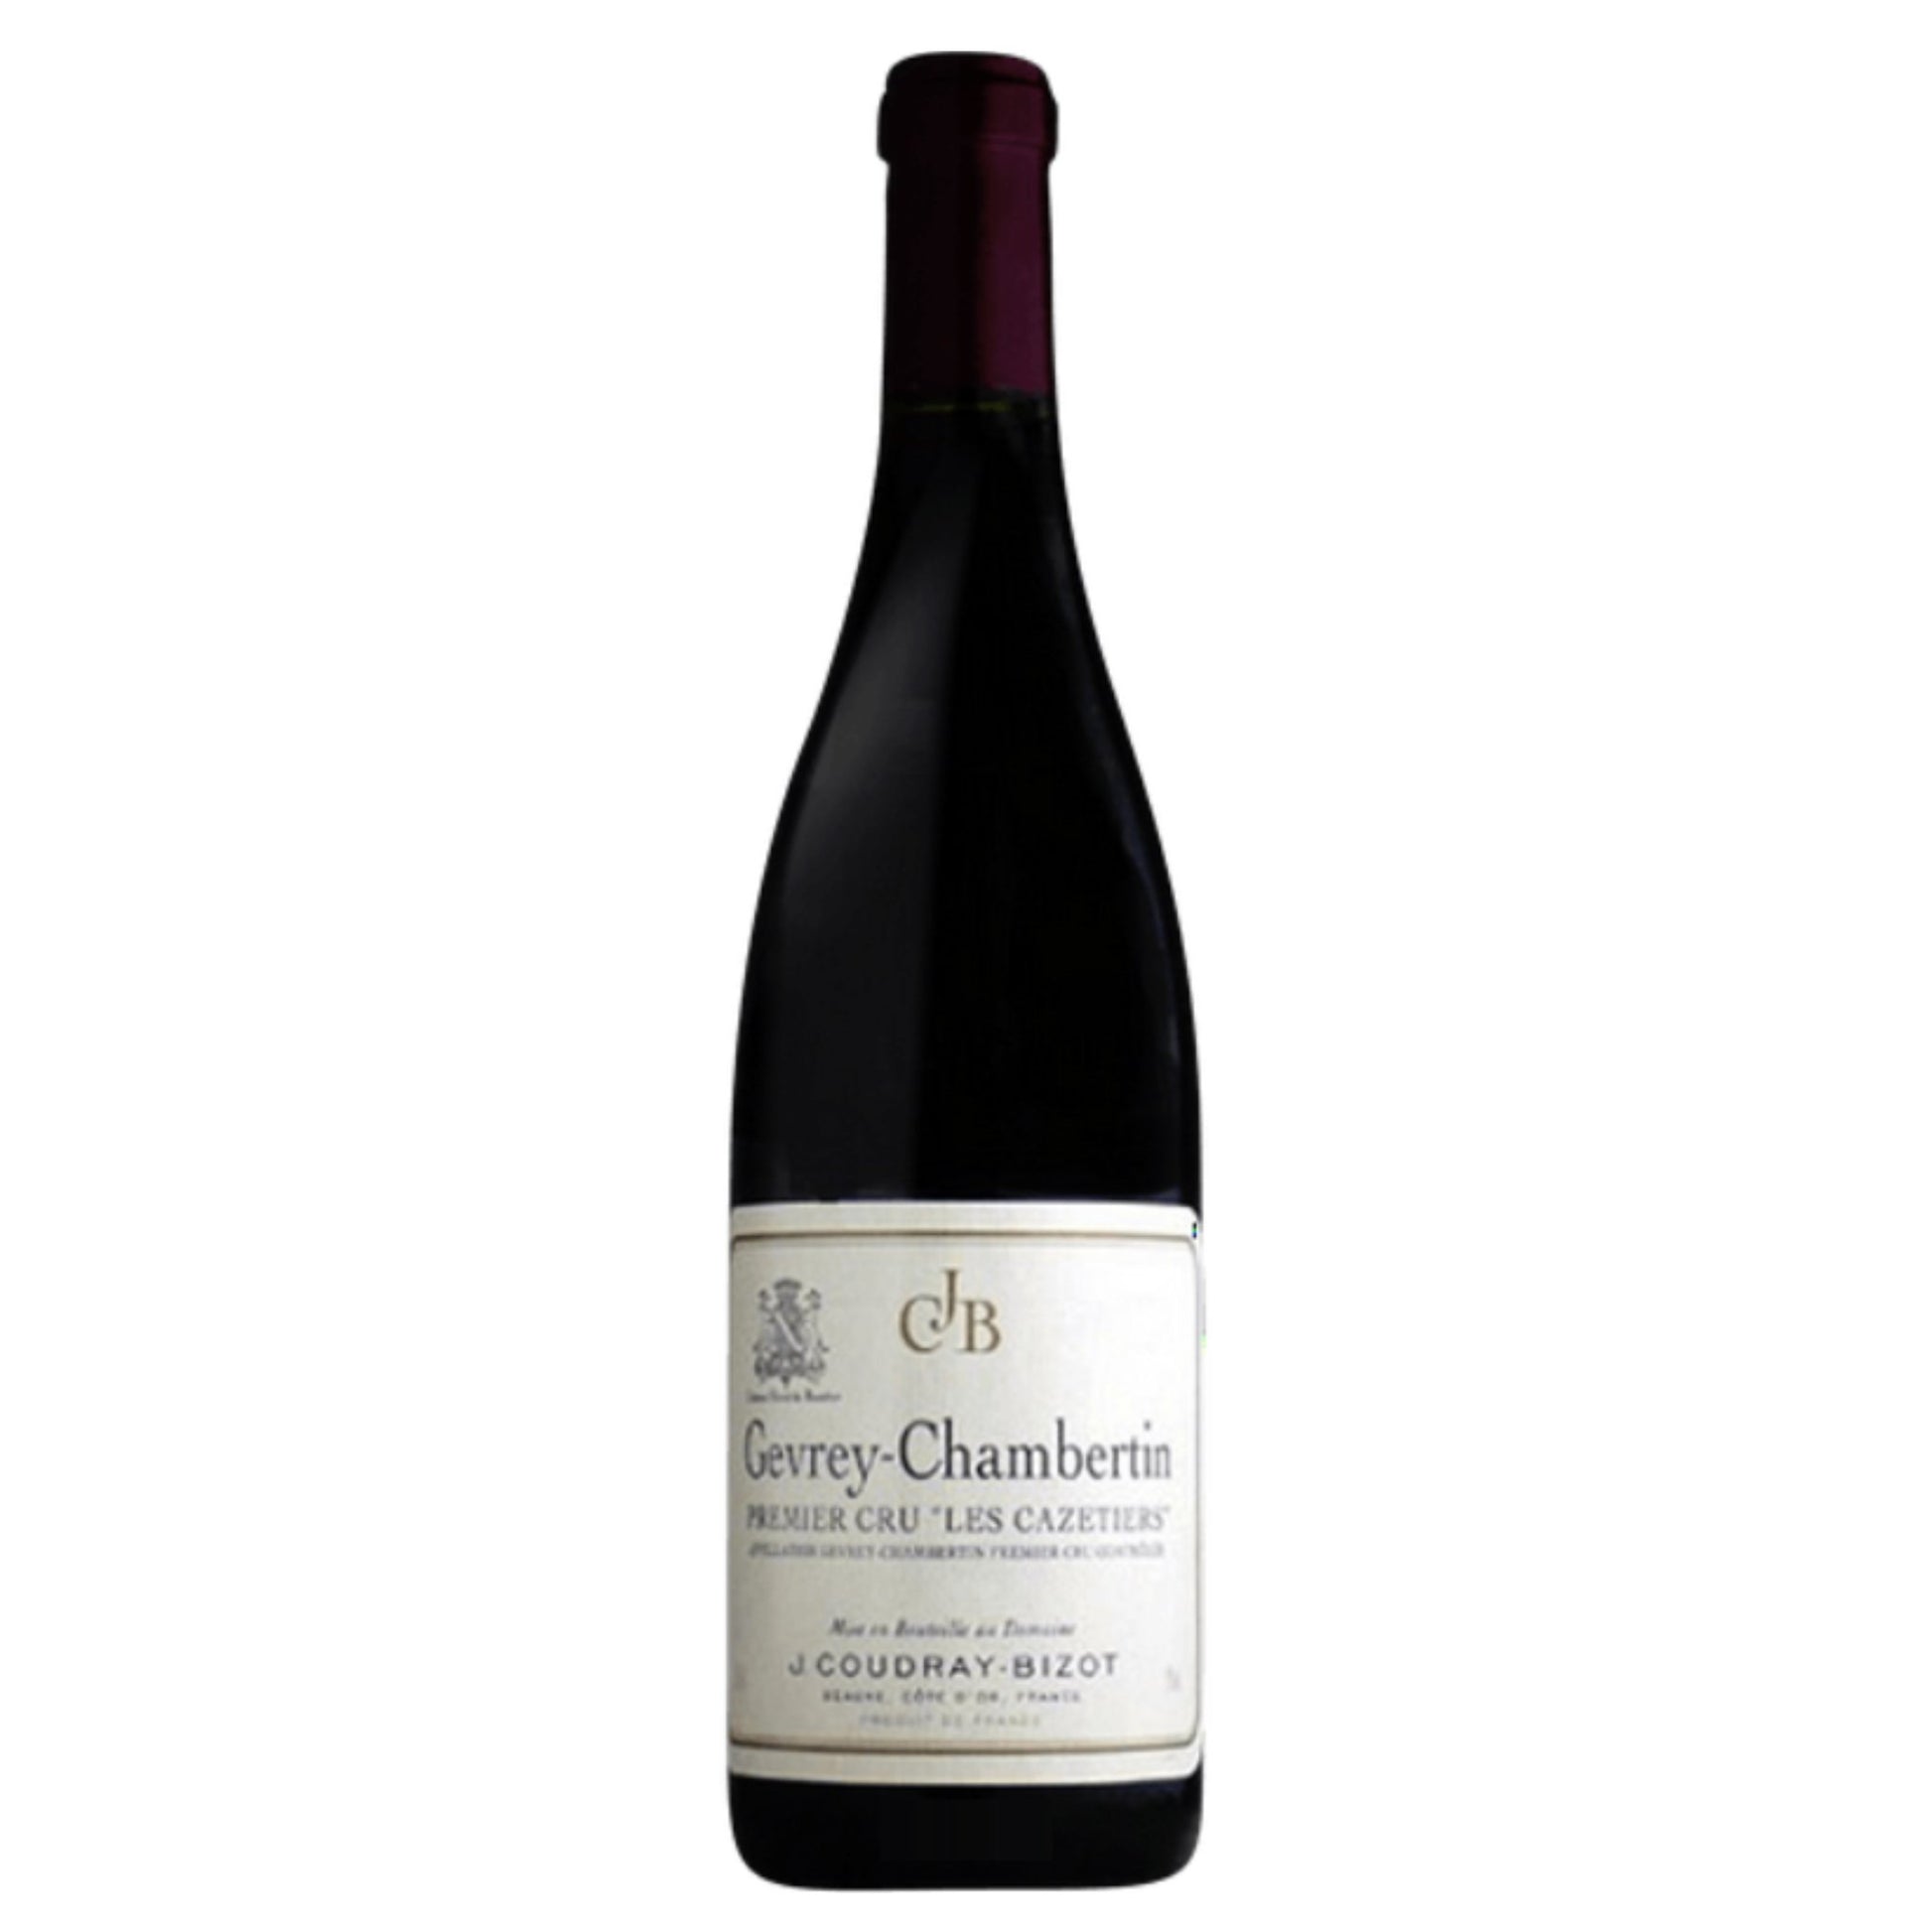 Coudray Bizot Gevrey Chambertin 1er Cru - Grand Vin Pte Ltd